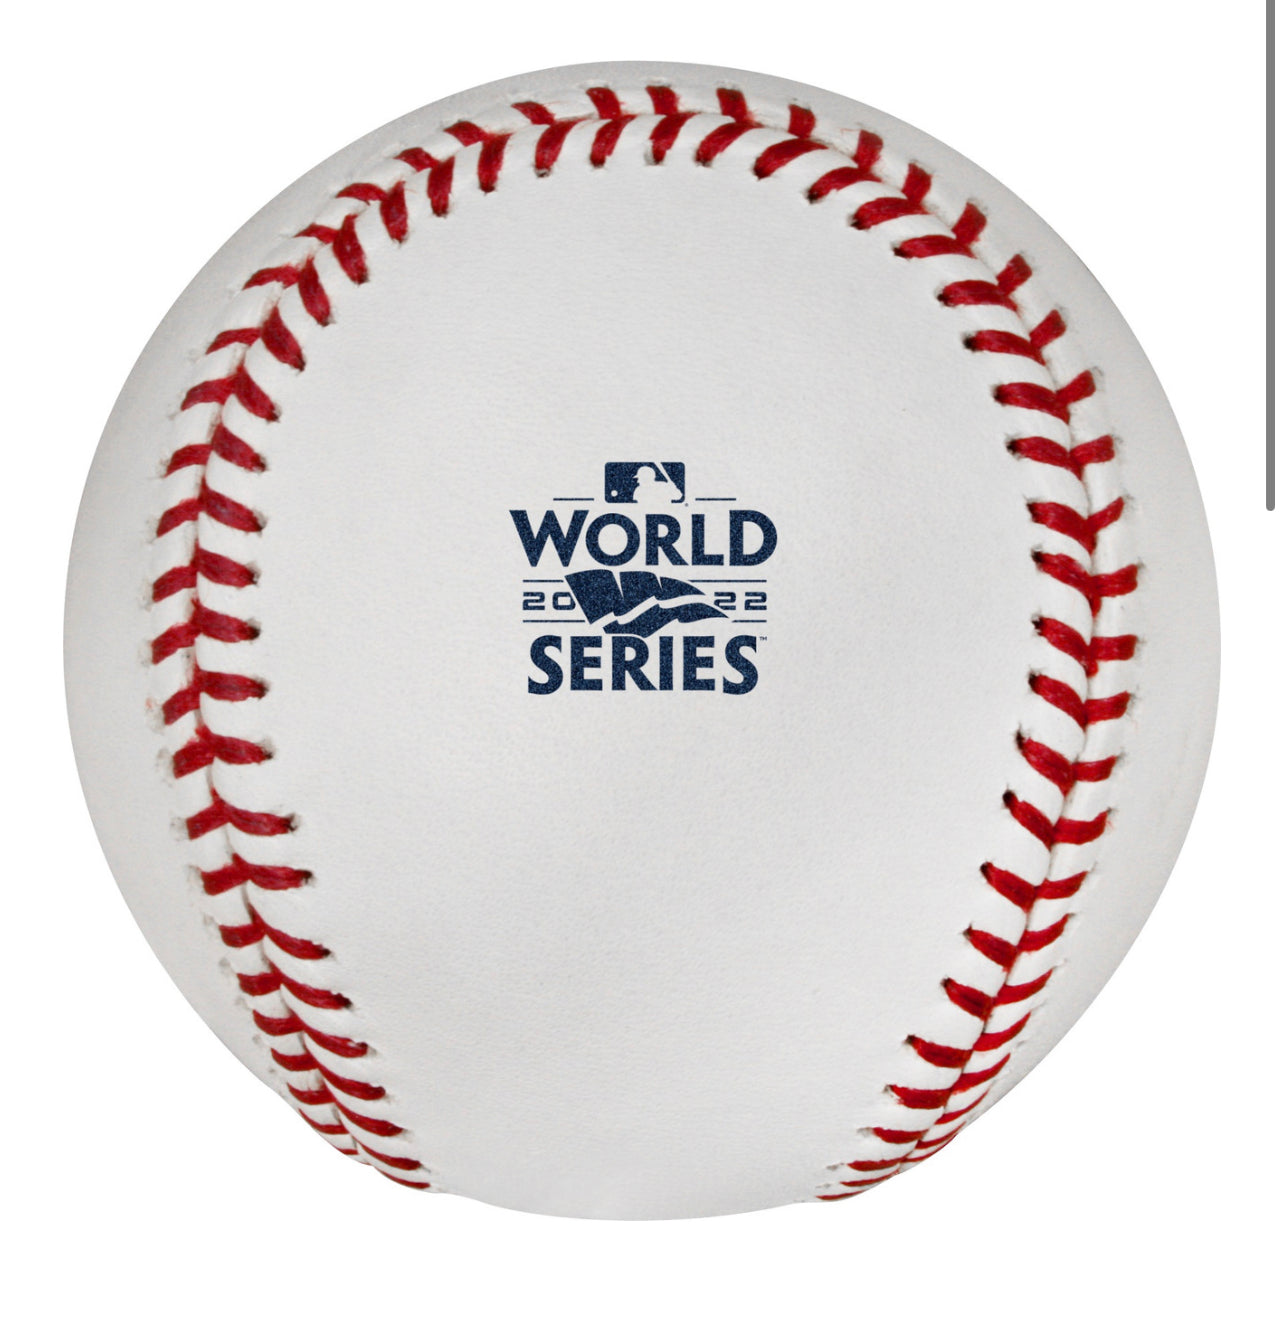 David Ross Autographed Official 2016 World Series Baseball